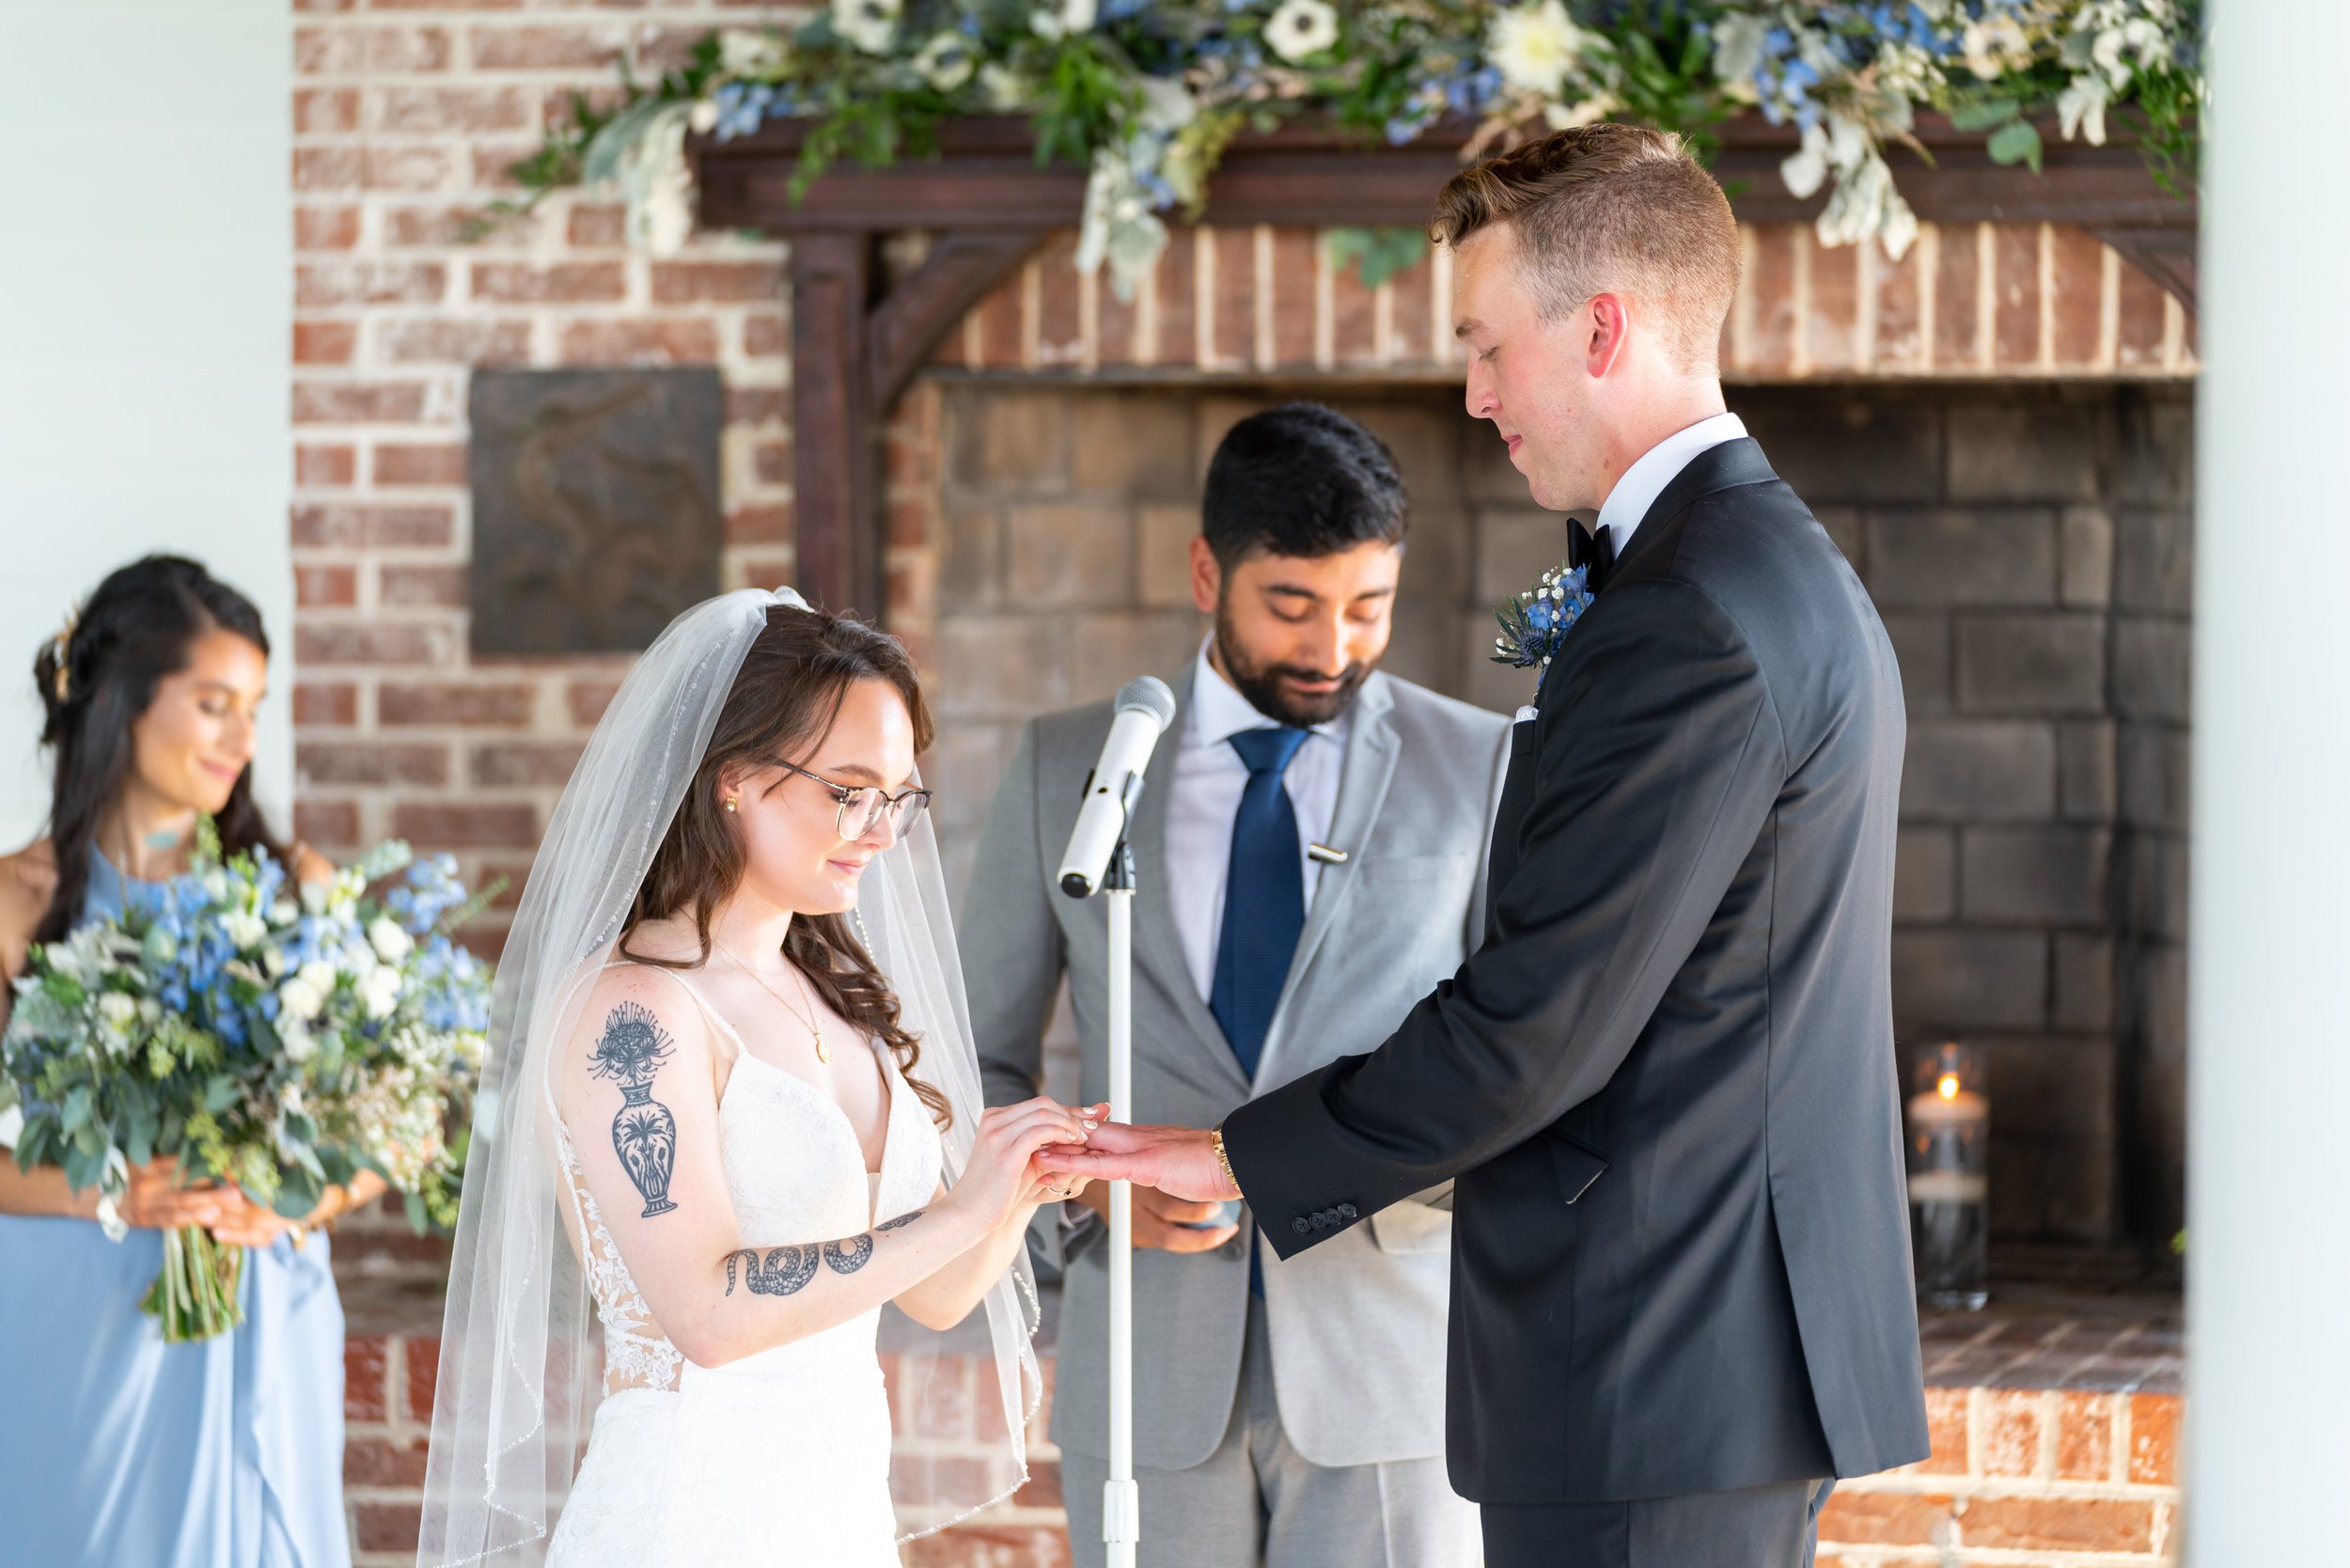 Bride puts ring on groom's finger at Hyatt Chesapeake maryland wedding